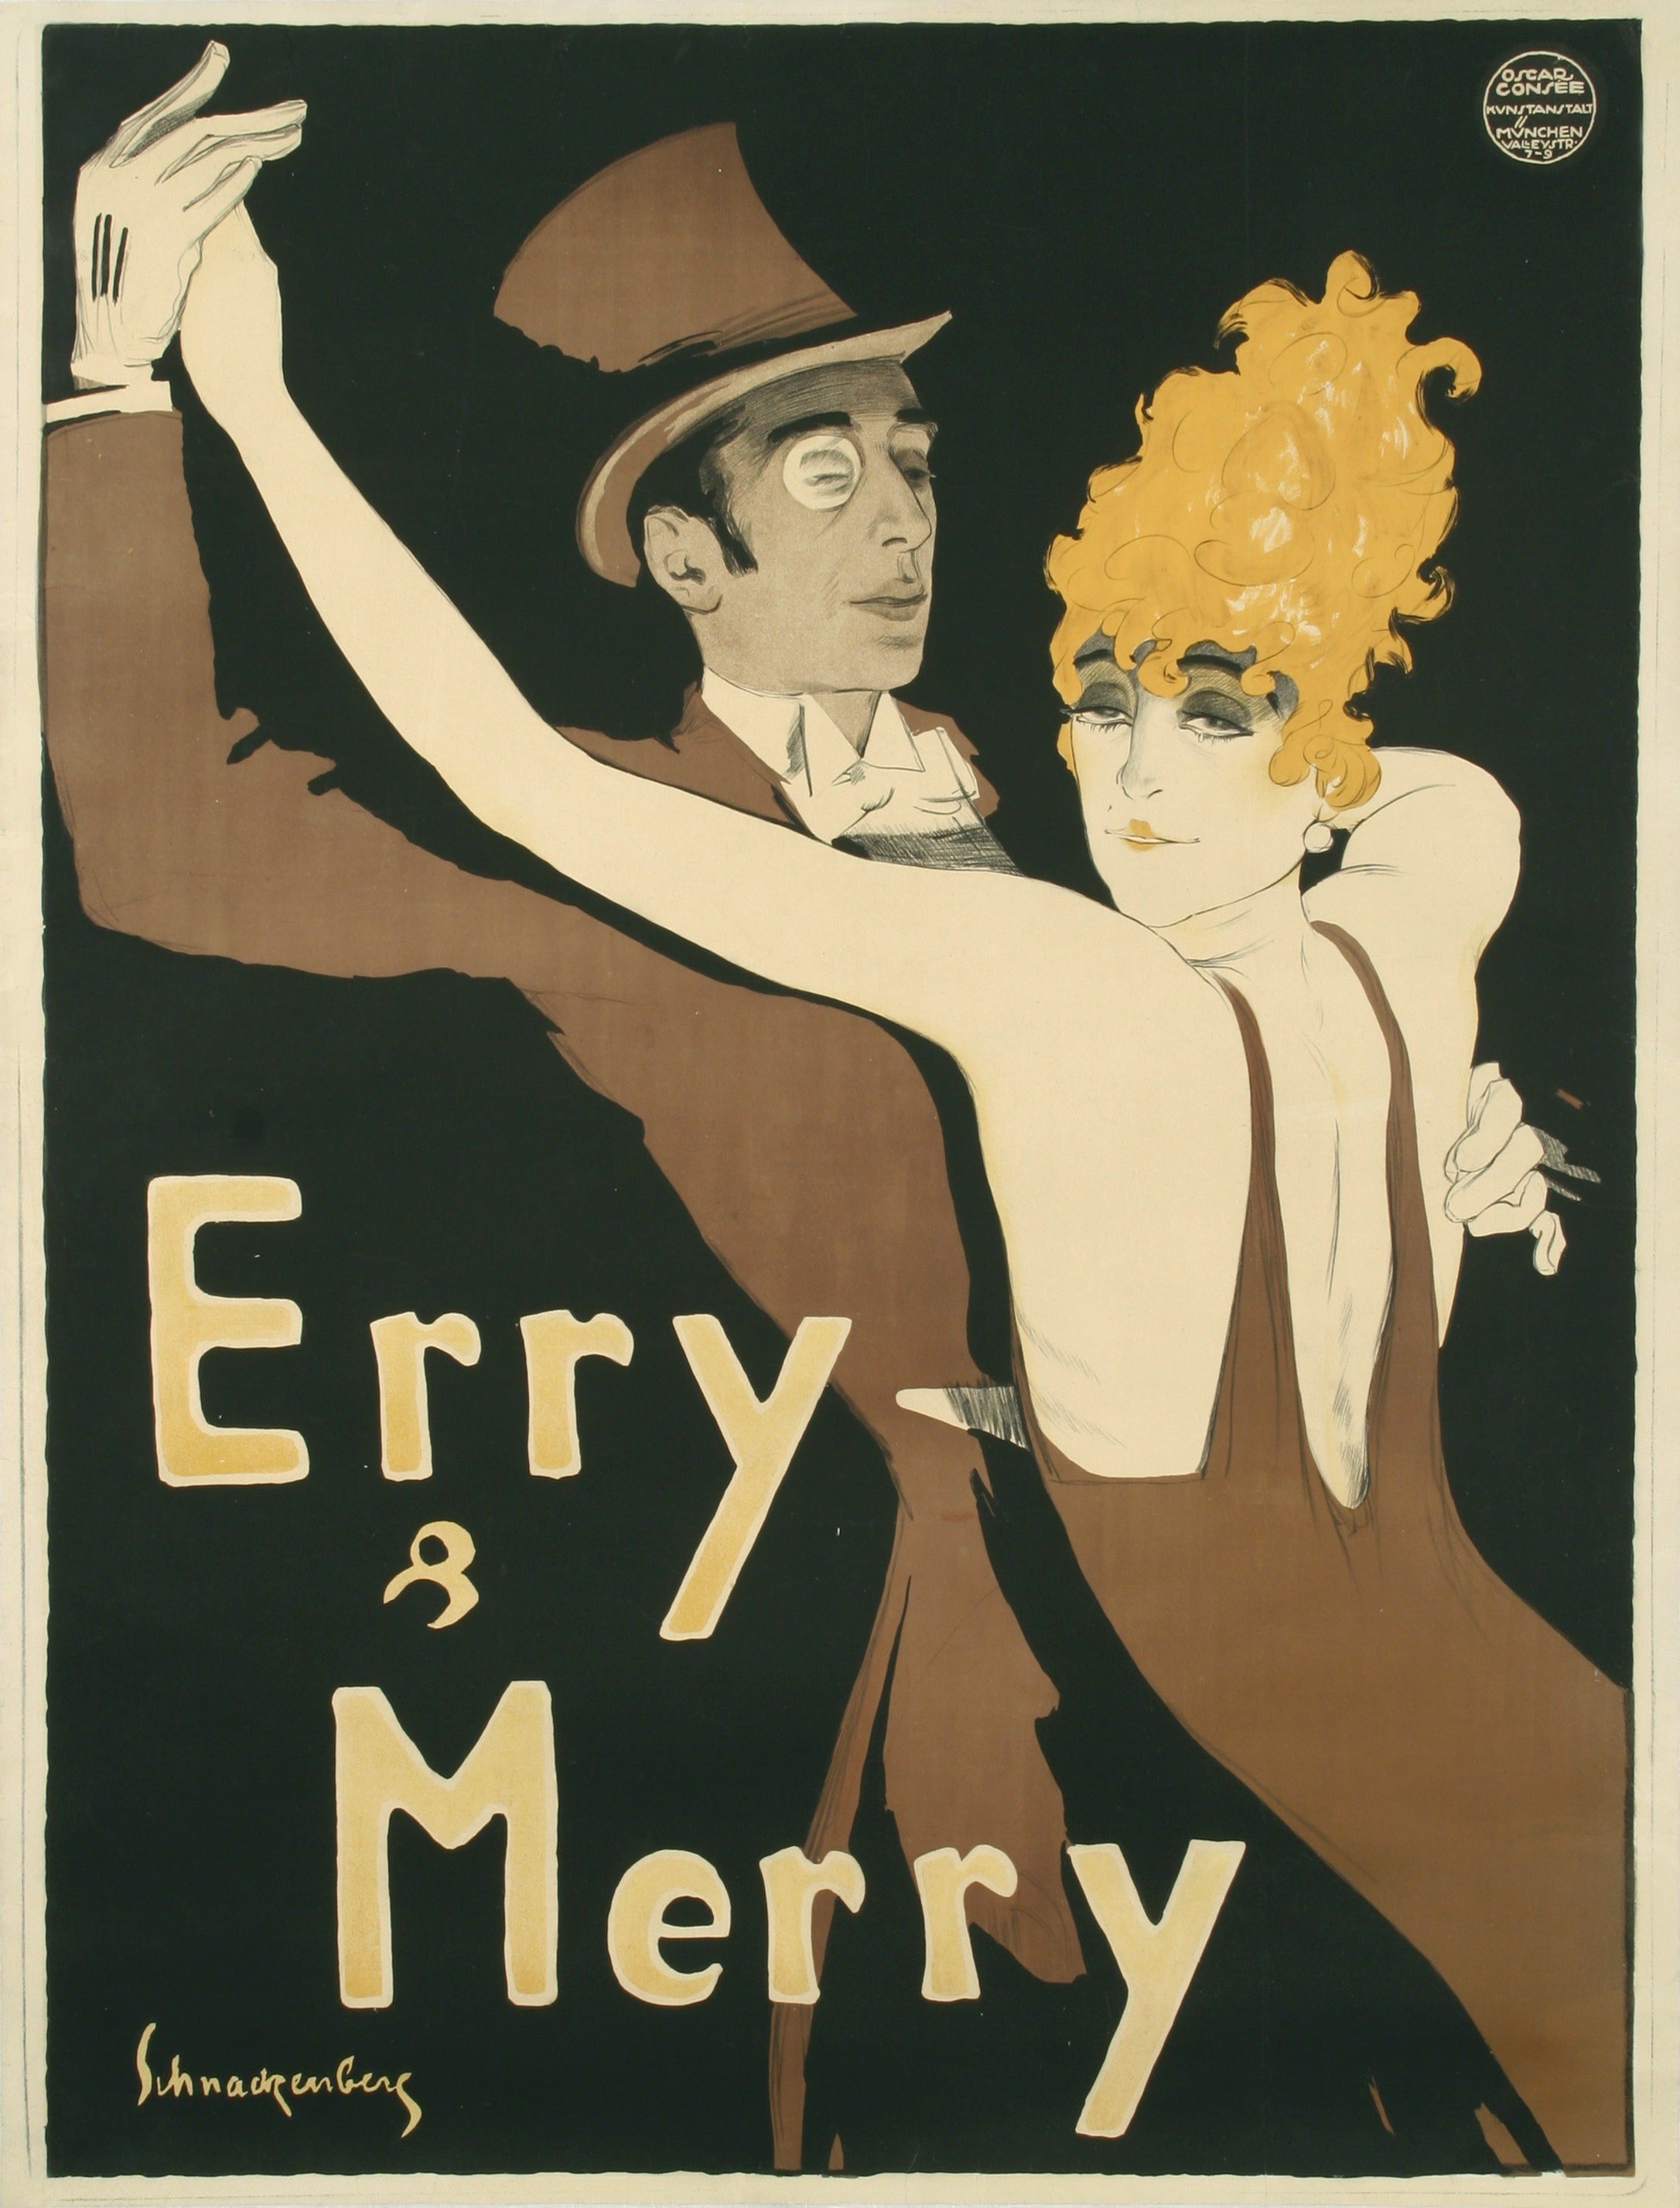 Walter Schnackenberg German "Erry & Merry" Dance Team Poster, 1912 - Rare